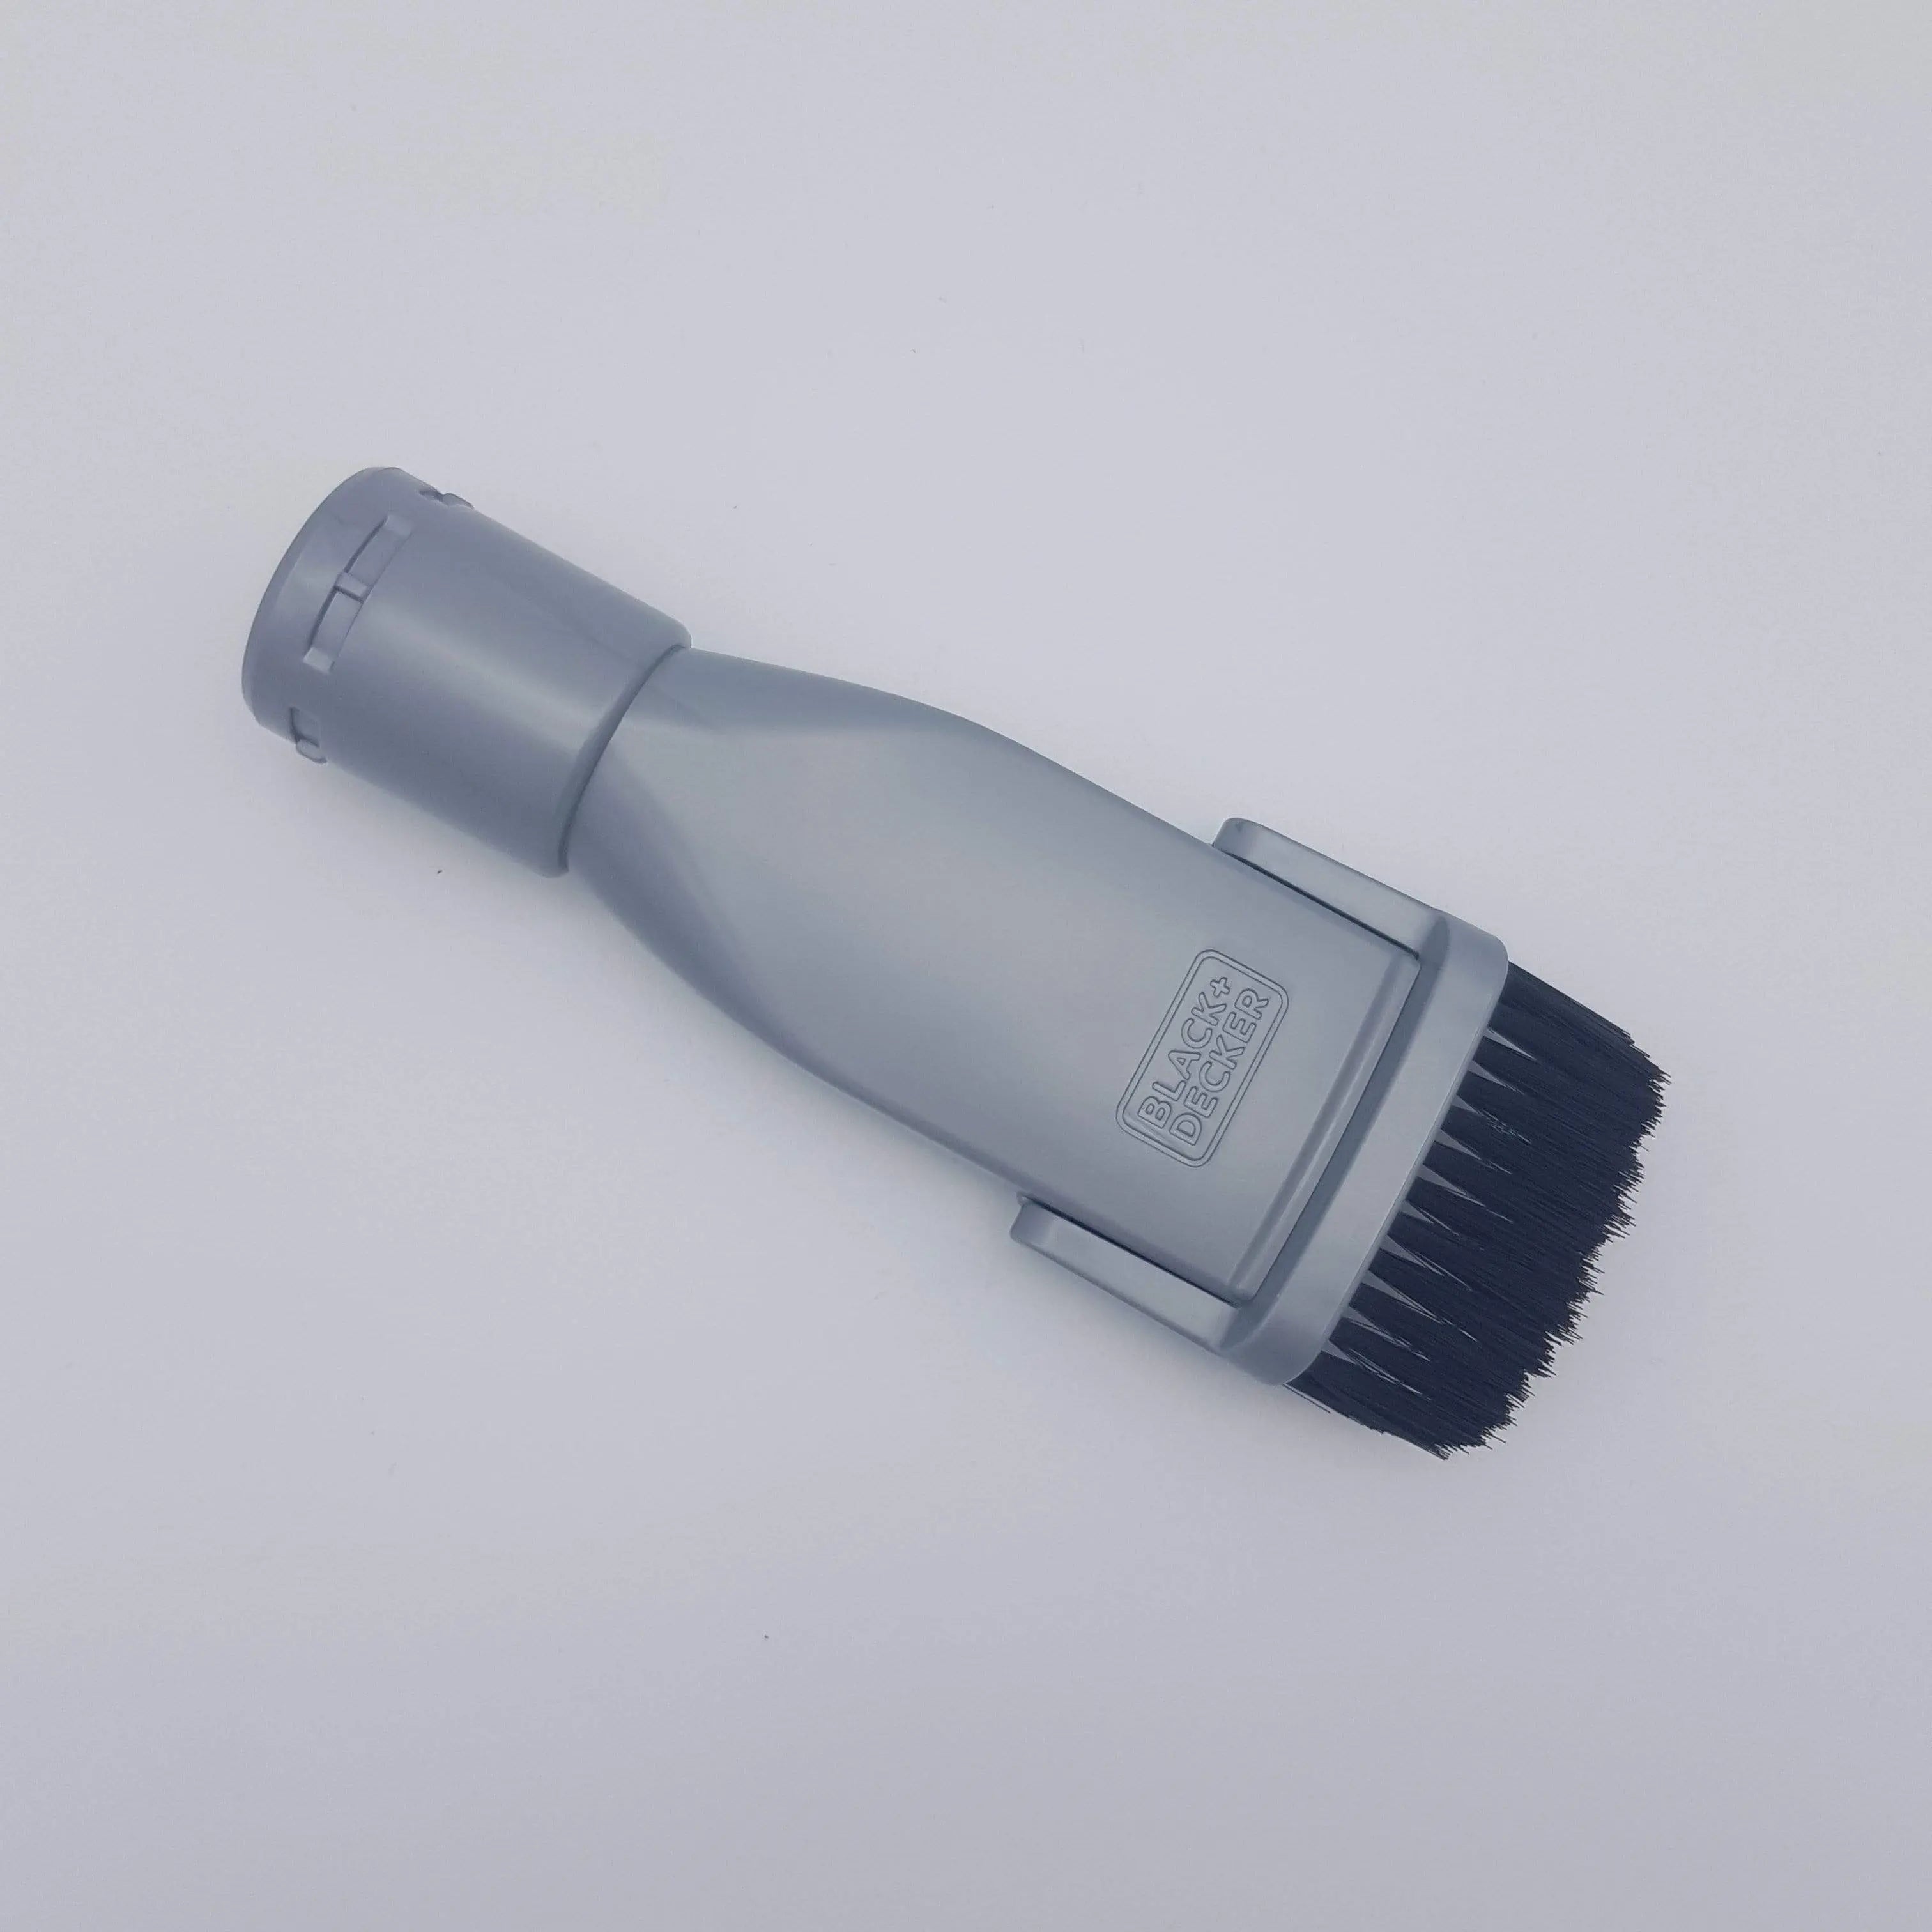 Kit tubi e spazzola aspirapolvere Flexi Lithium Black+Decker PD1420L/PD1820L BLACK+DECKER